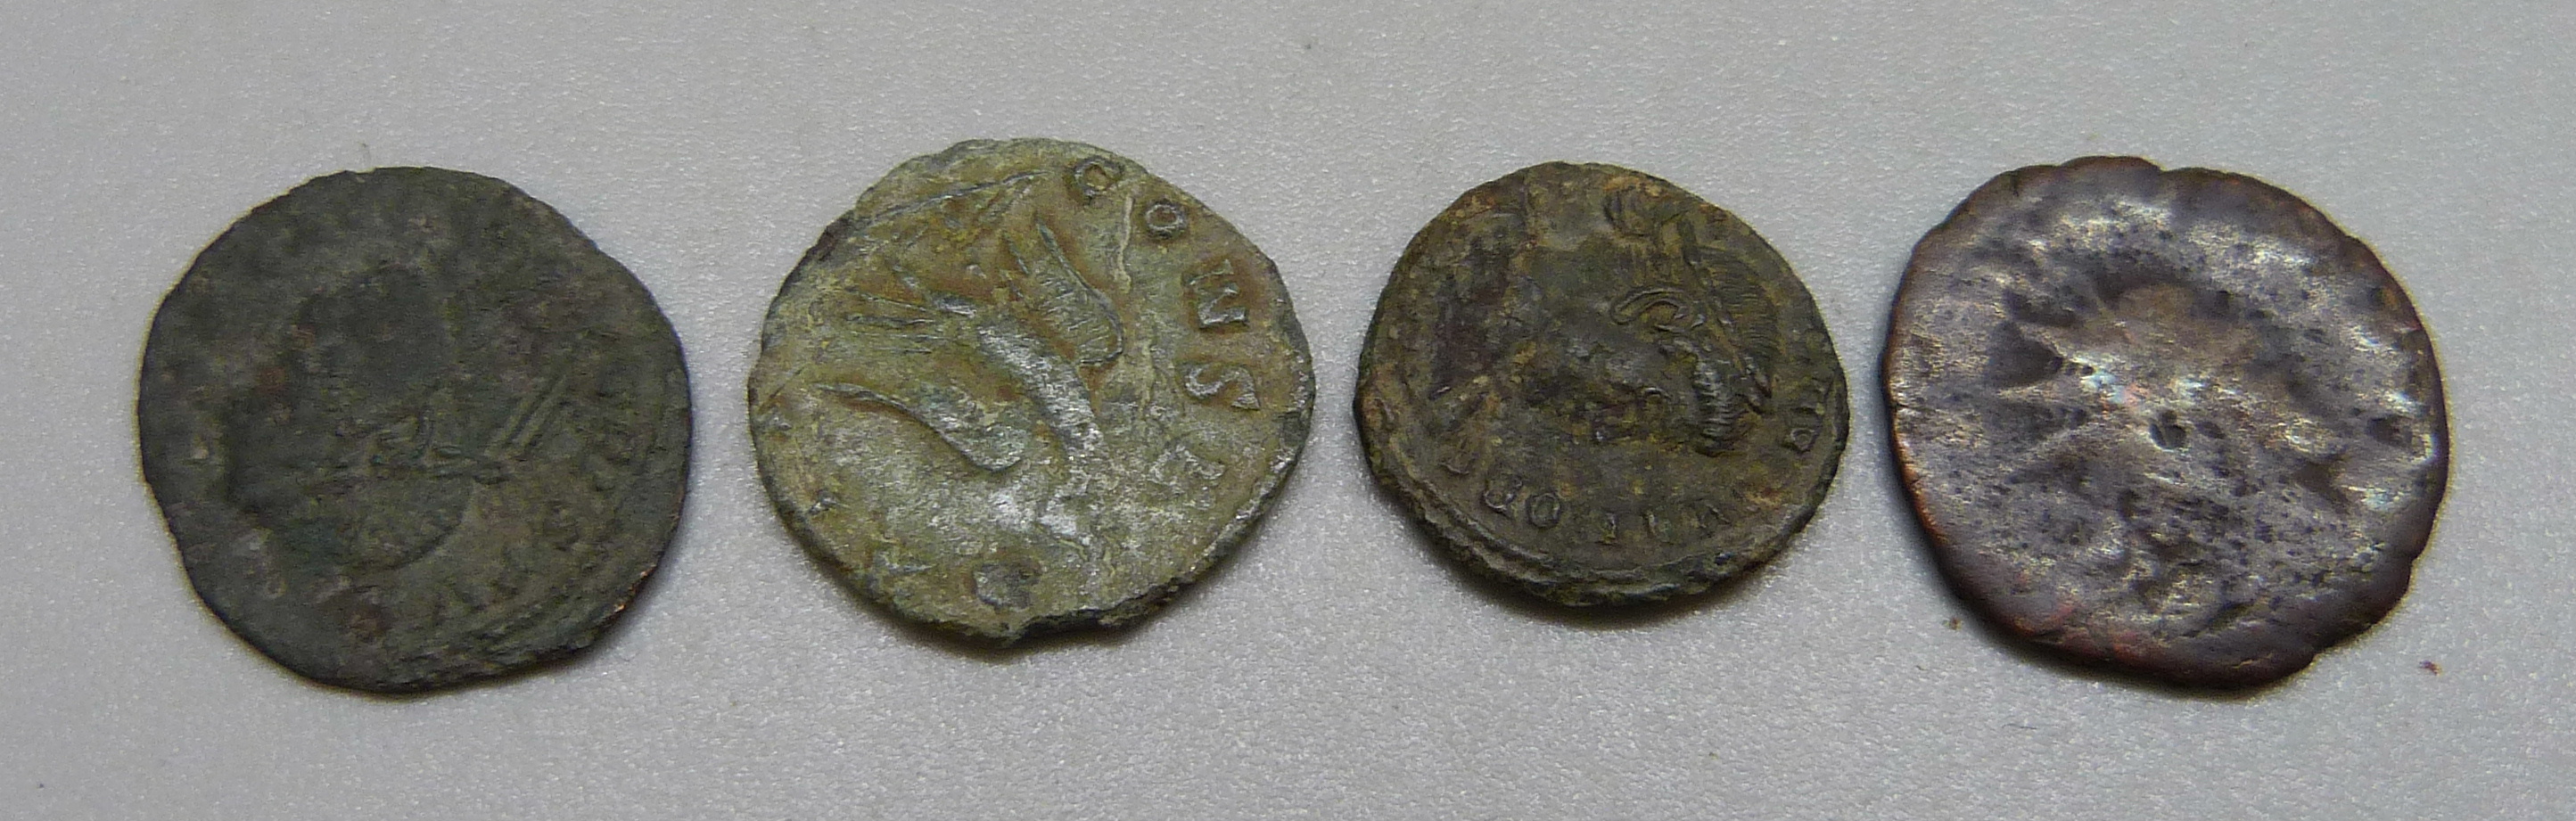 Four bronze Roman coins